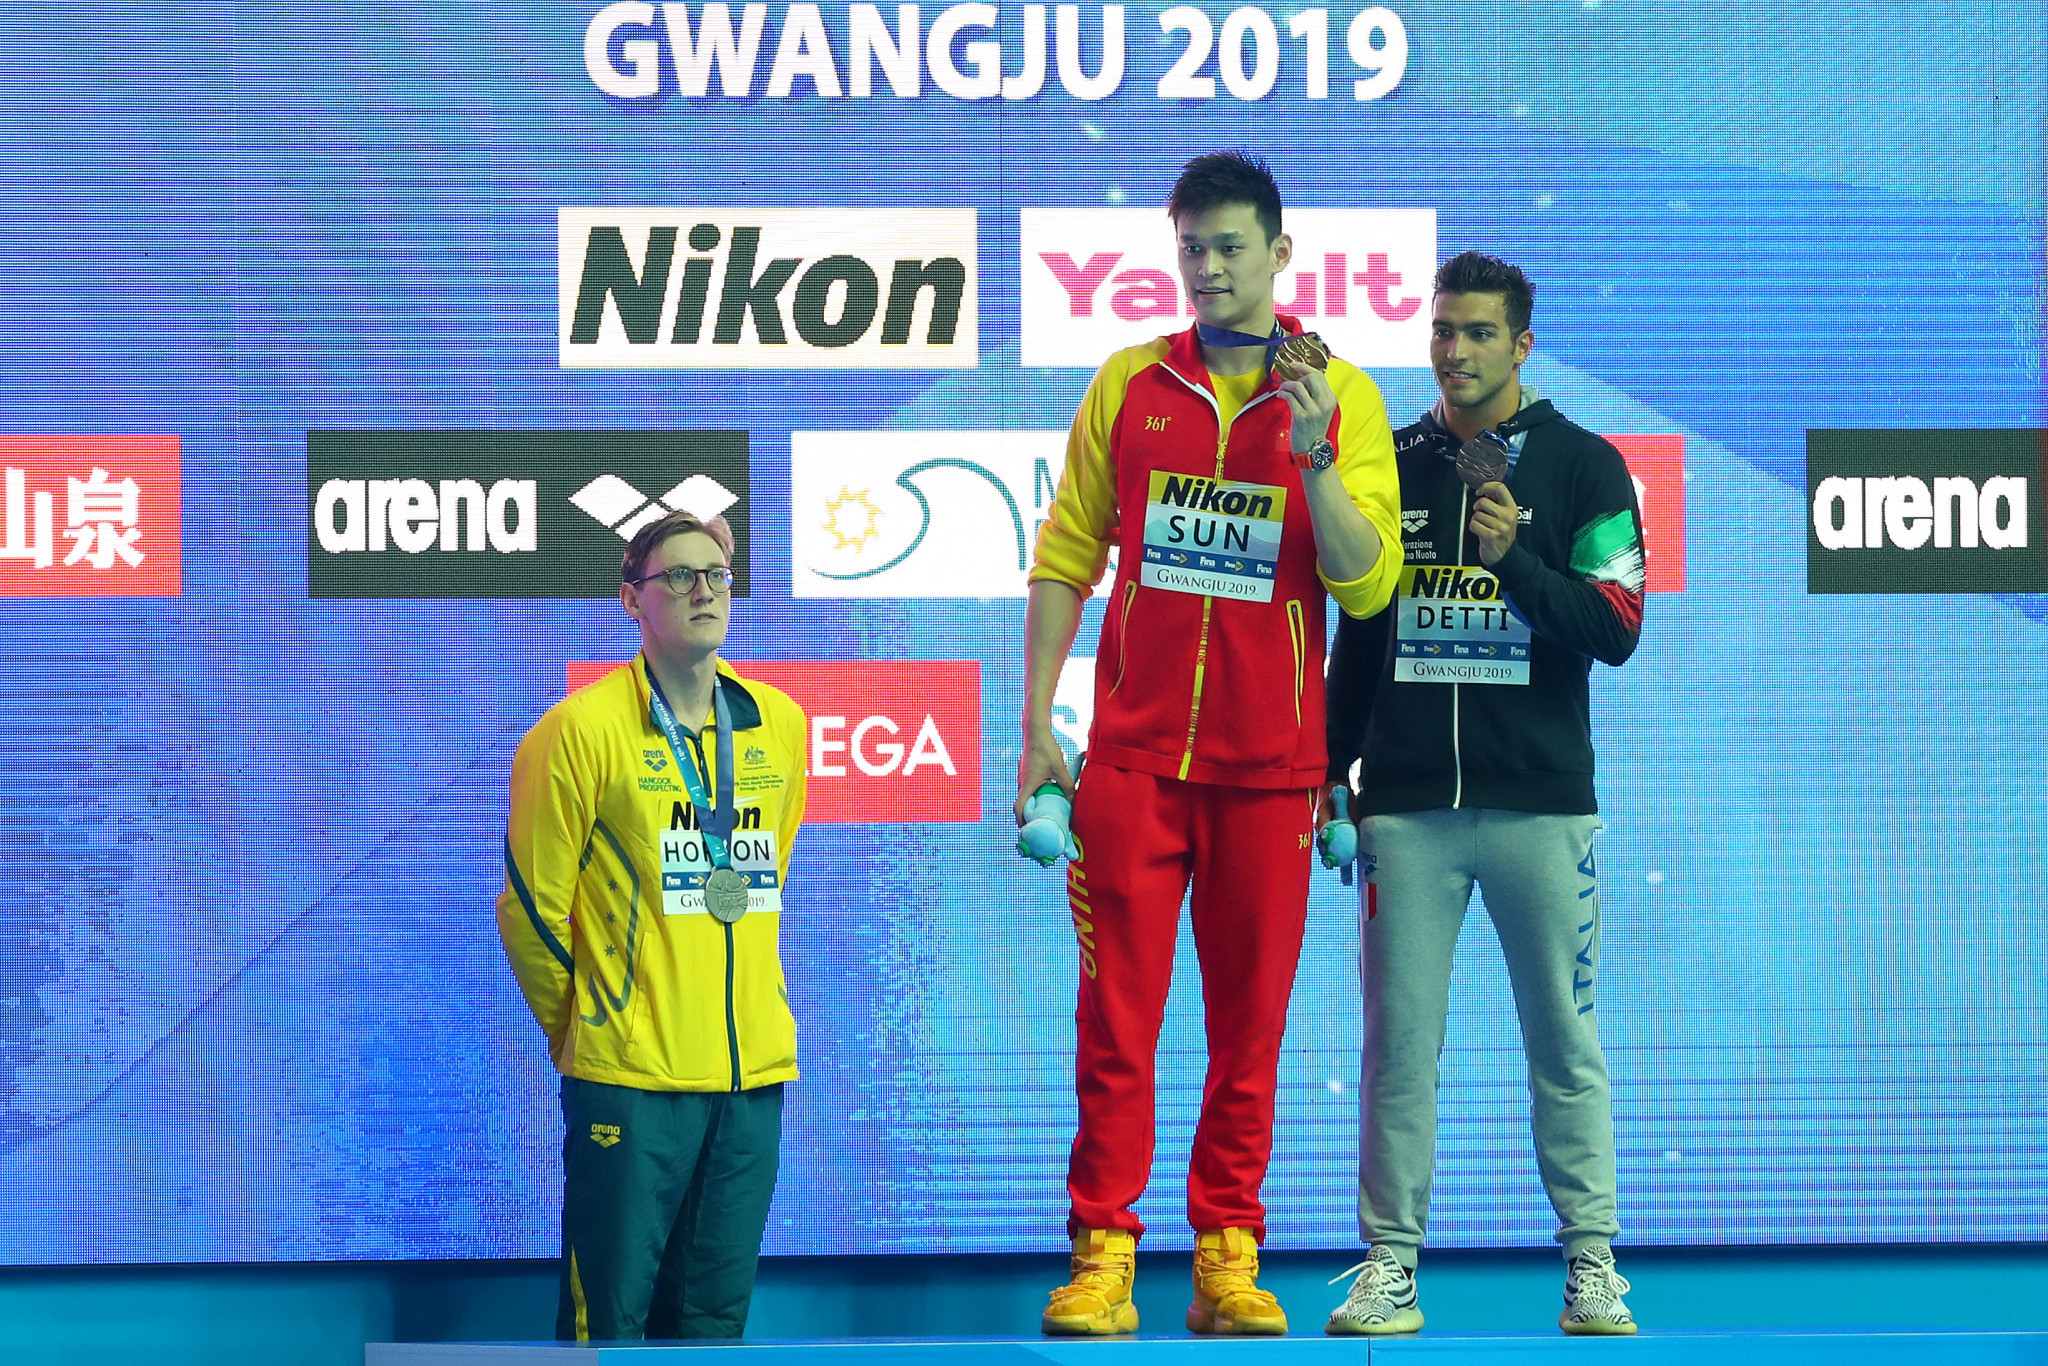 Australia's Mack Horton refused to step onto the medal podium at the 2019 International Swimming Federation World Aquatics Championships in Gwangju ©Getty Images